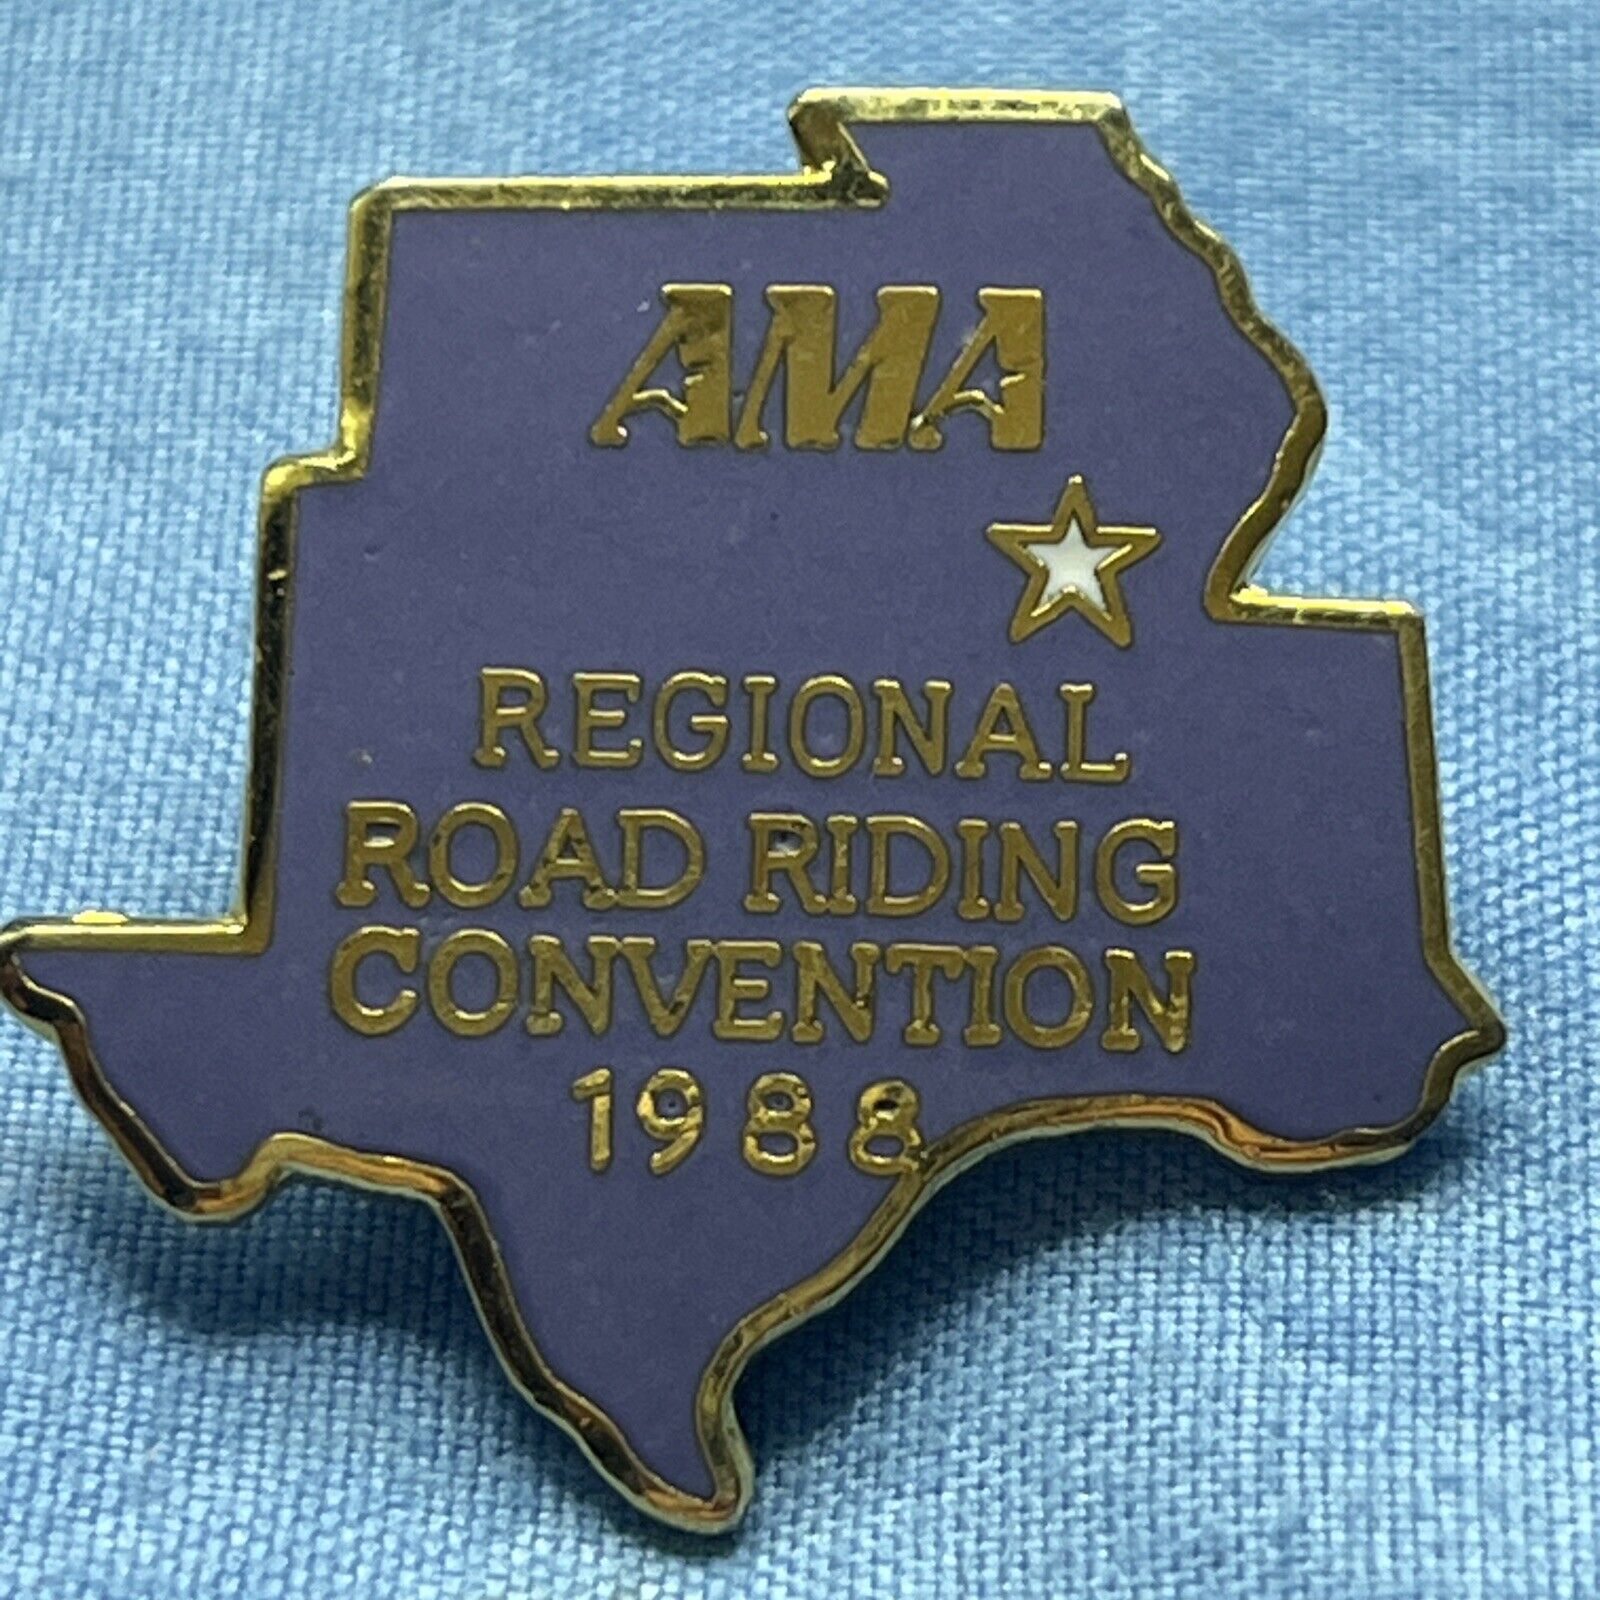 1988 AMA REGIONAL ROAD RIDING CONVENTION ENAMEL PIN